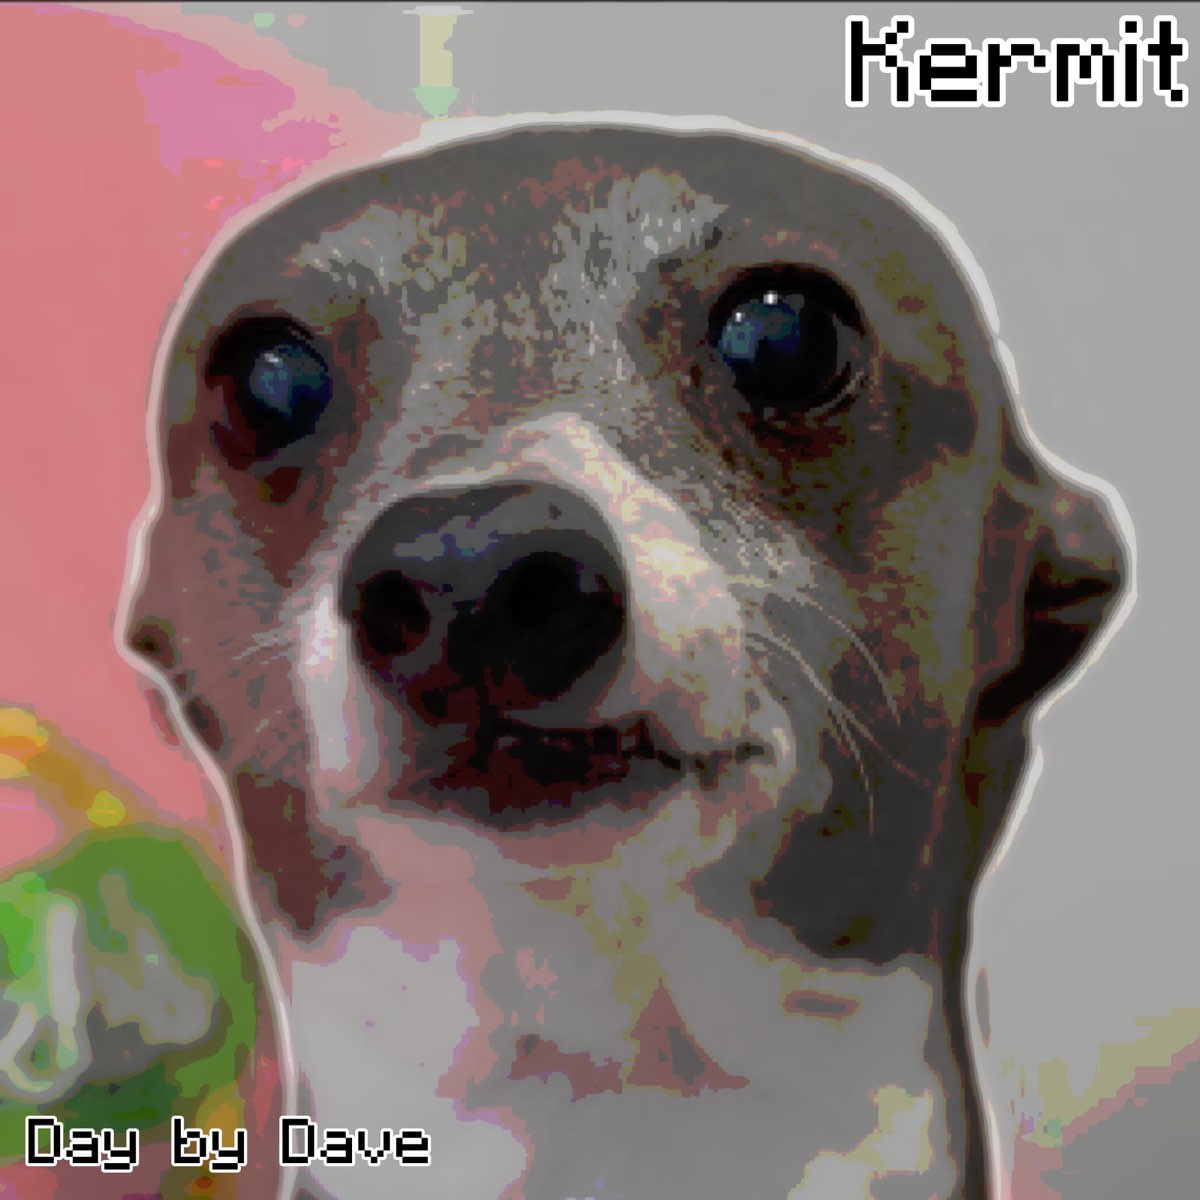 kermit the dog meme